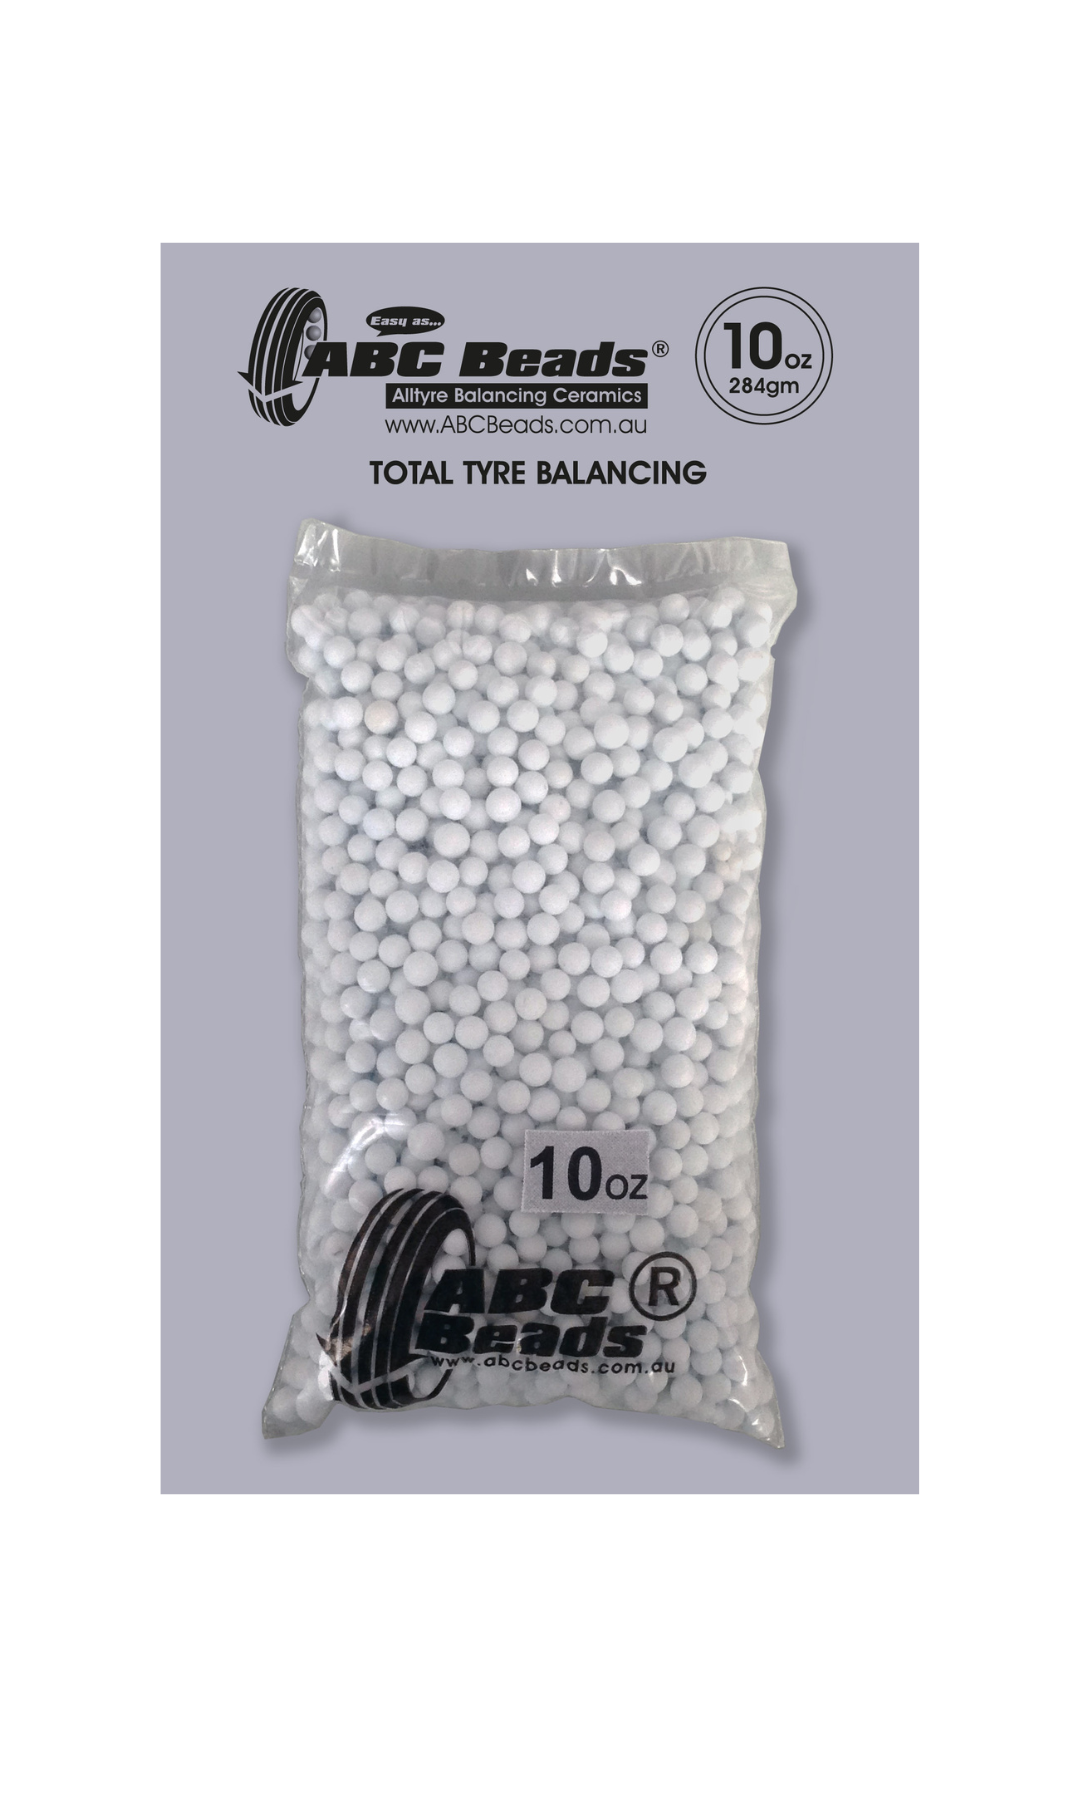 10oz Bag of ABC Tyre Balancing Beads - ABC Beads